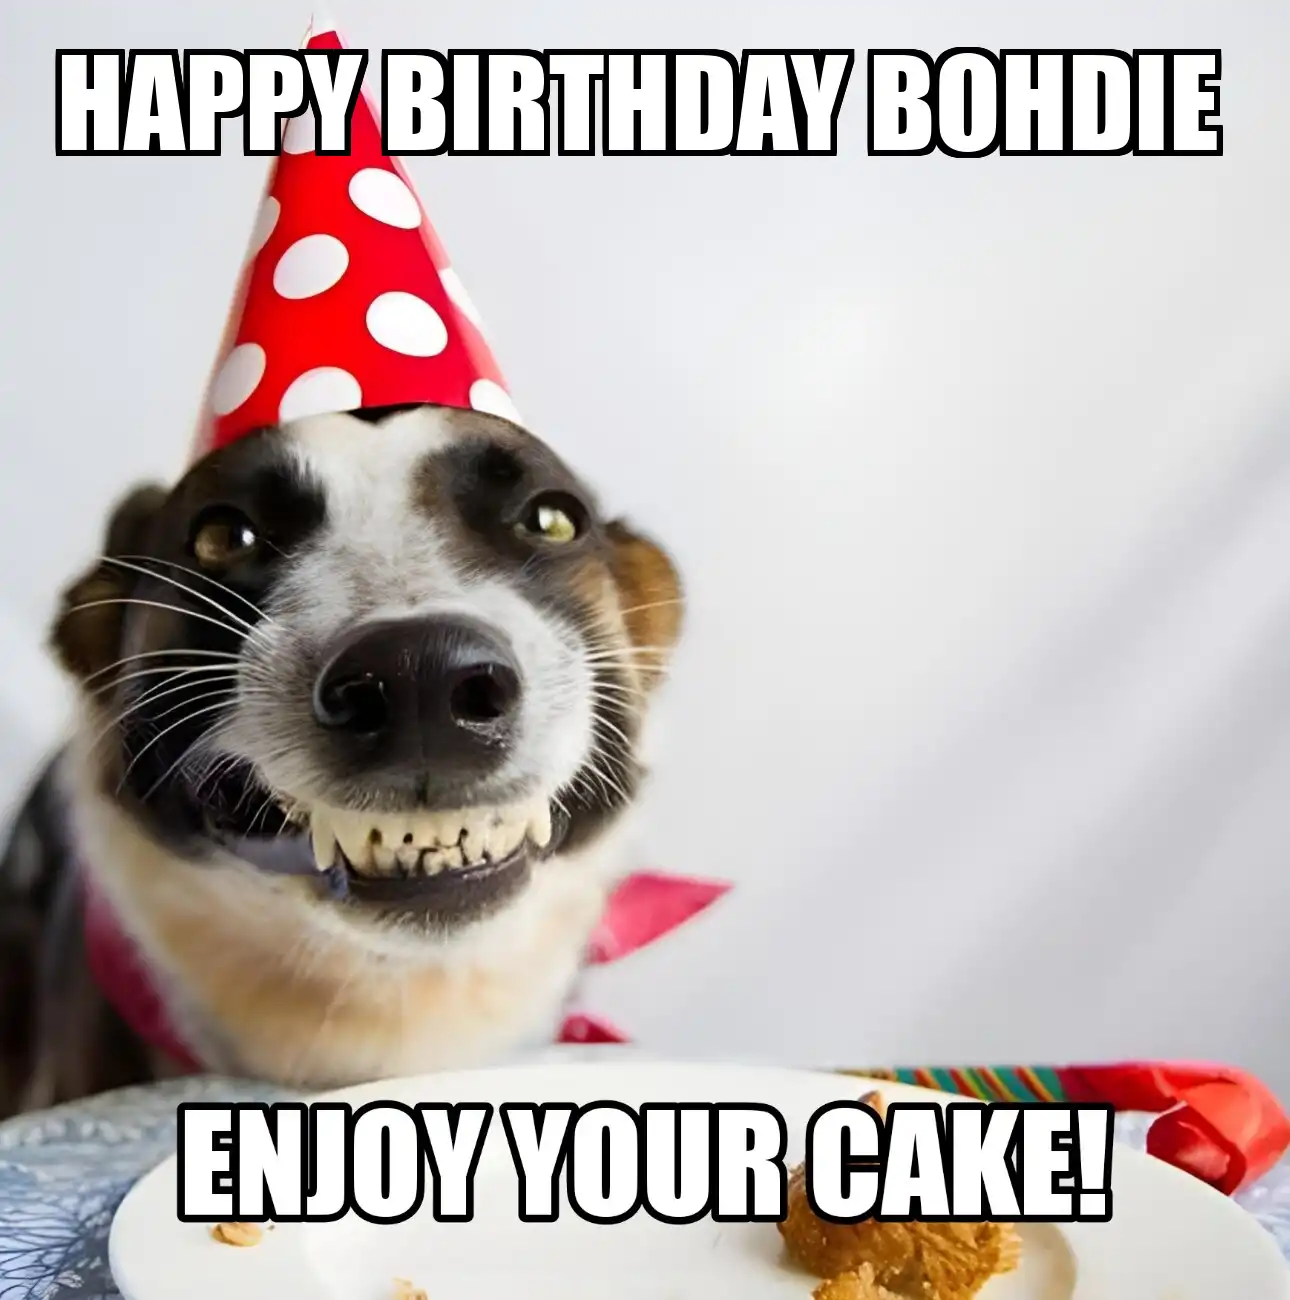 Happy Birthday Bohdie Enjoy Your Cake Dog Meme